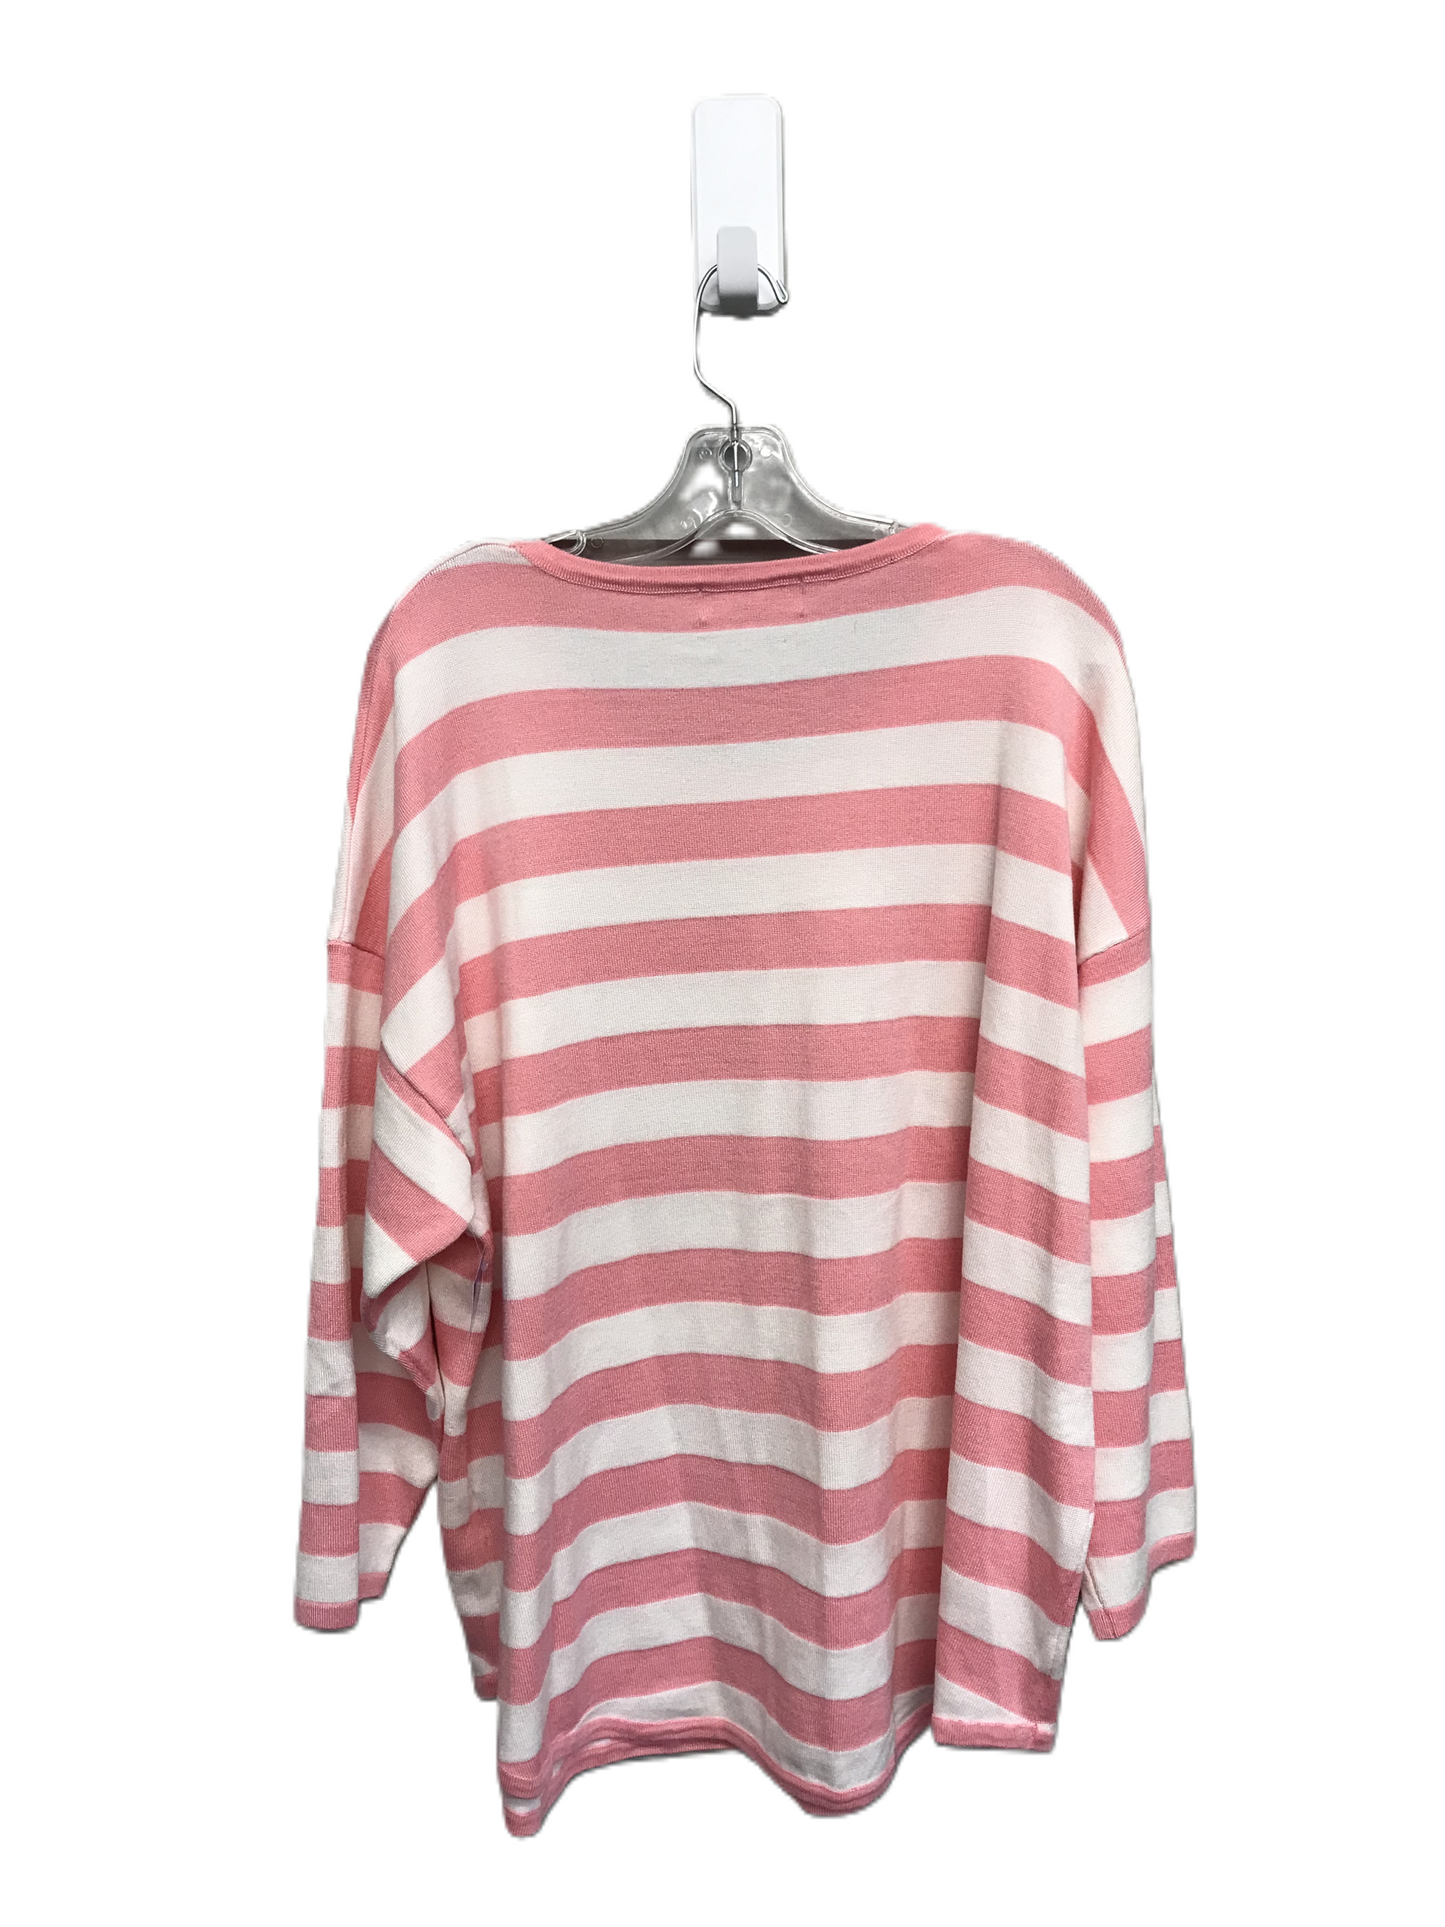 Striped Pattern Sweater By Philosophy, Size: 2x